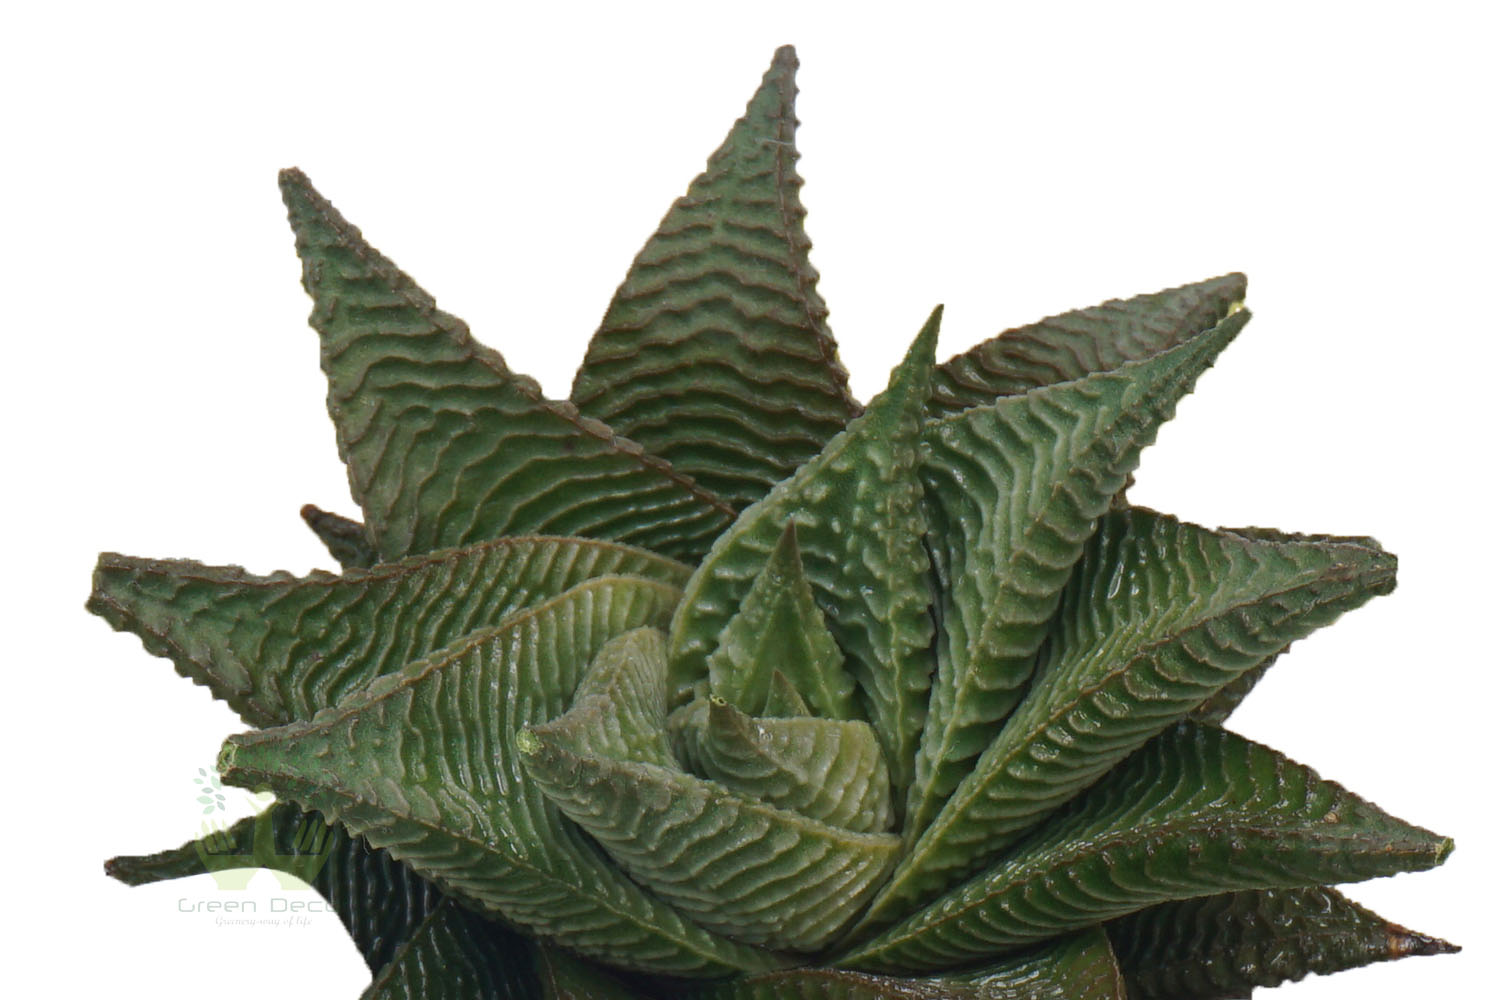 Buy Haworthia reinwardti Plants , White Pots and seeds in Delhi NCR by the best online nursery shop Greendecor.